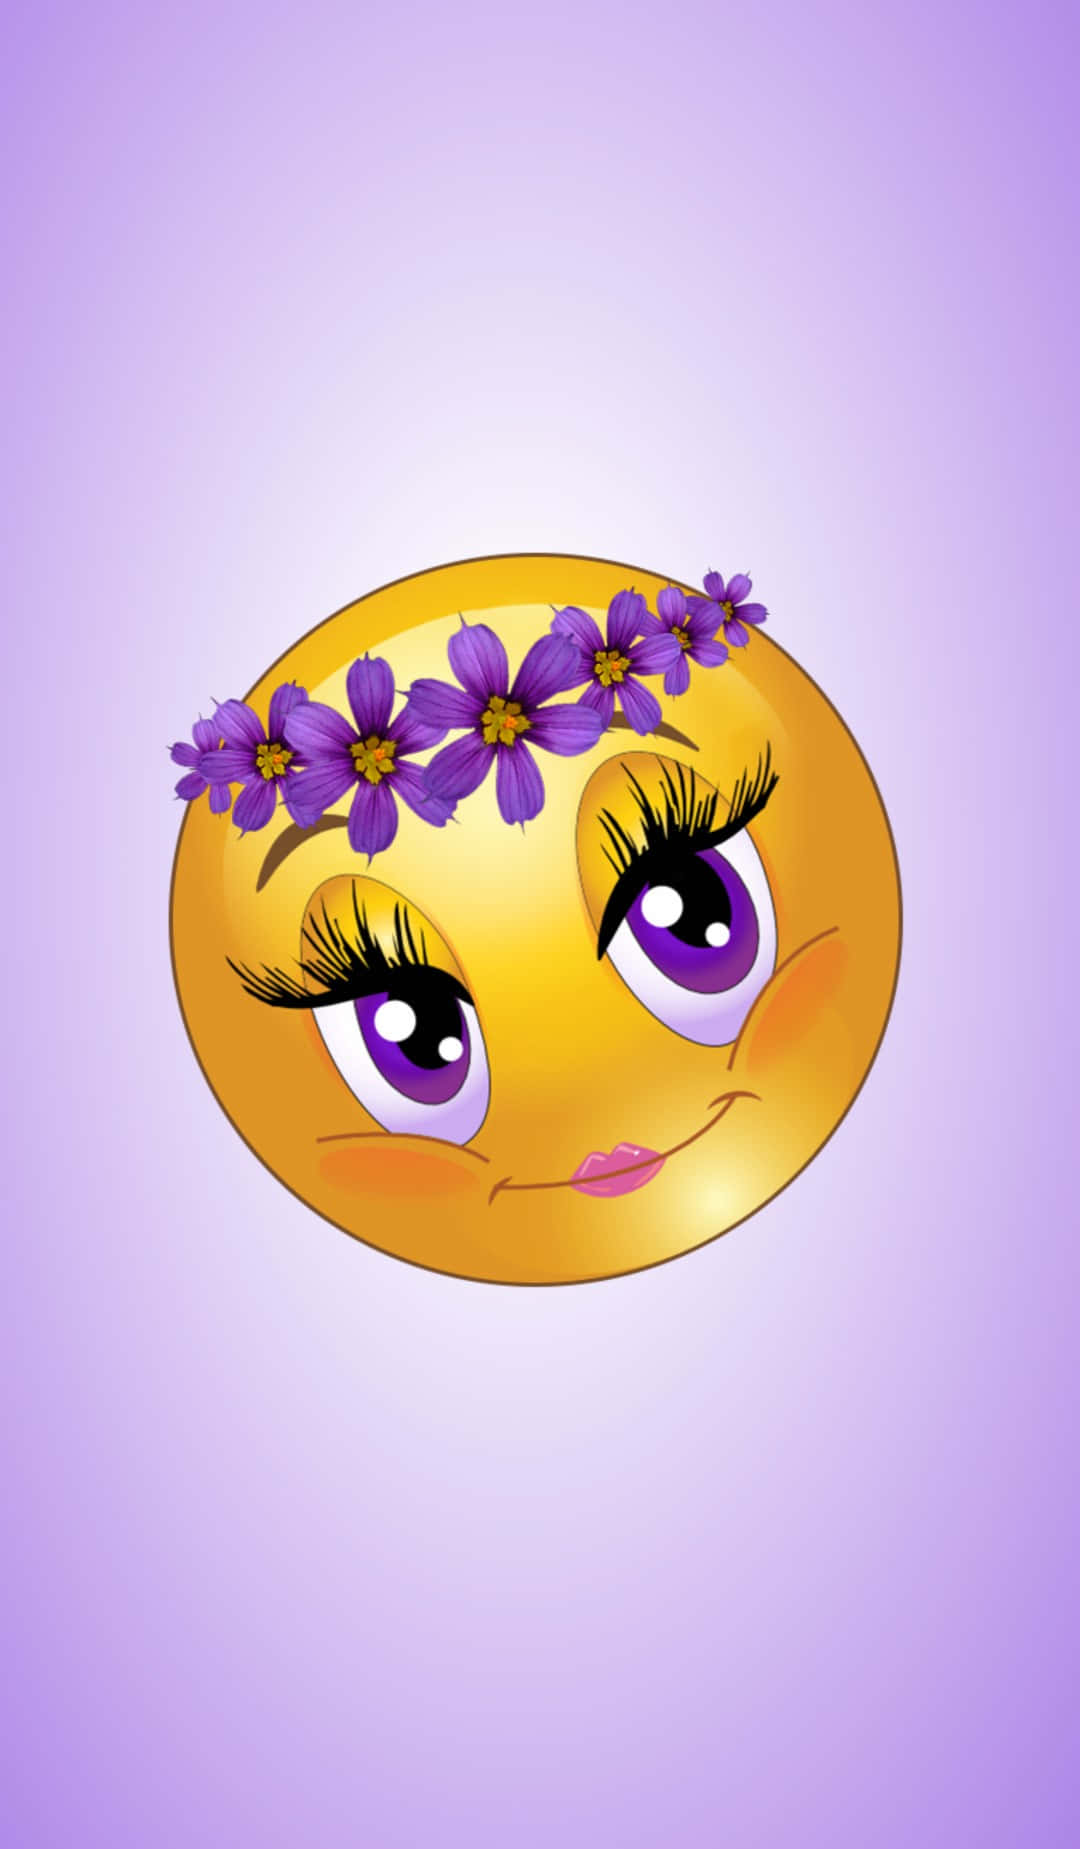 Emoji Girl With Purple Flower Crown Wallpaper